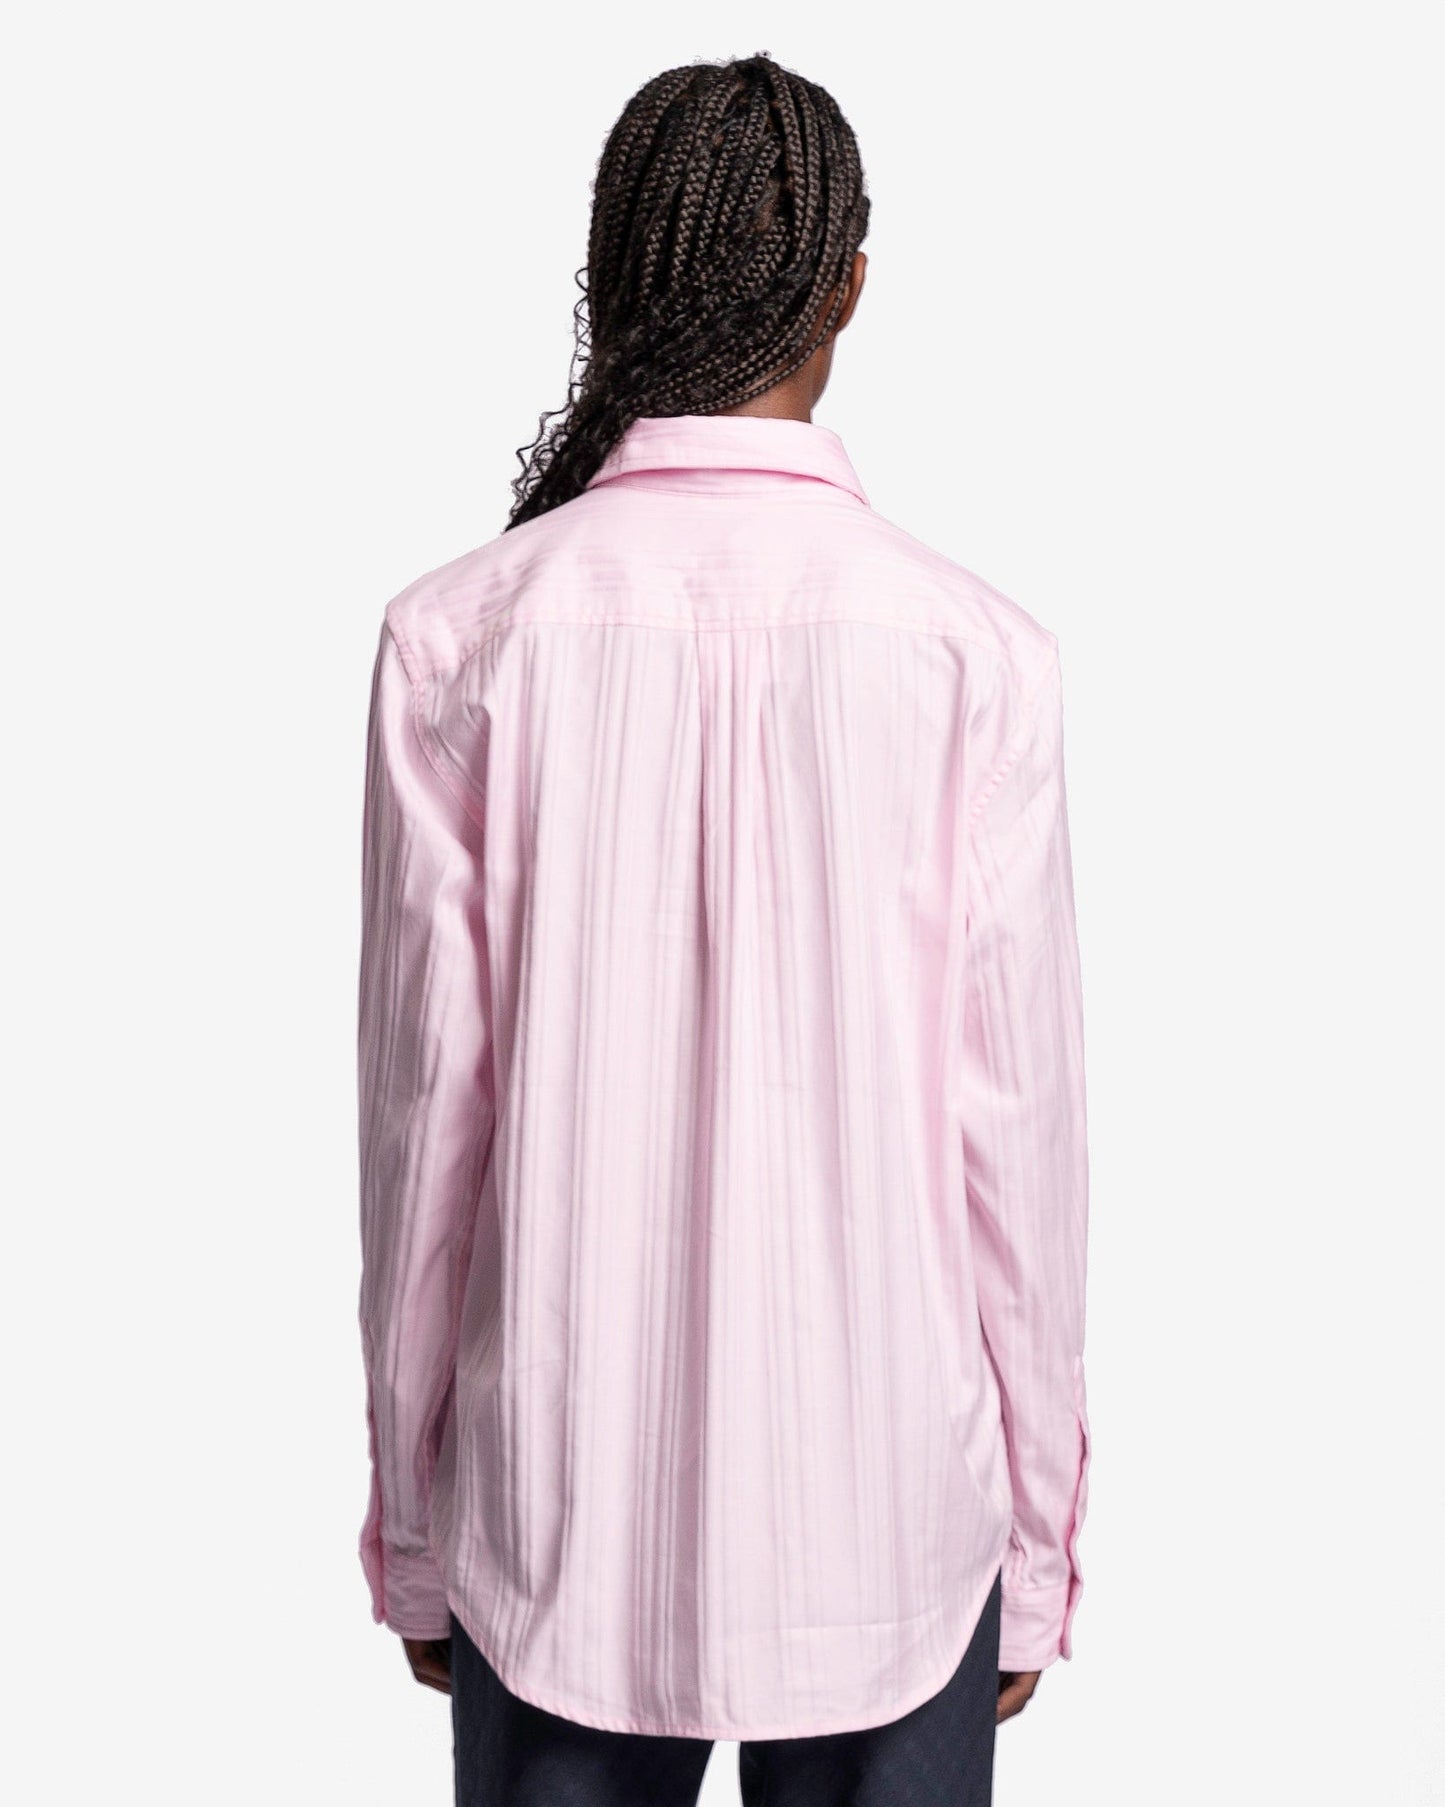 Nike Men's Shirt Nike x Martine Rose Dress Shirt in Pink Foam